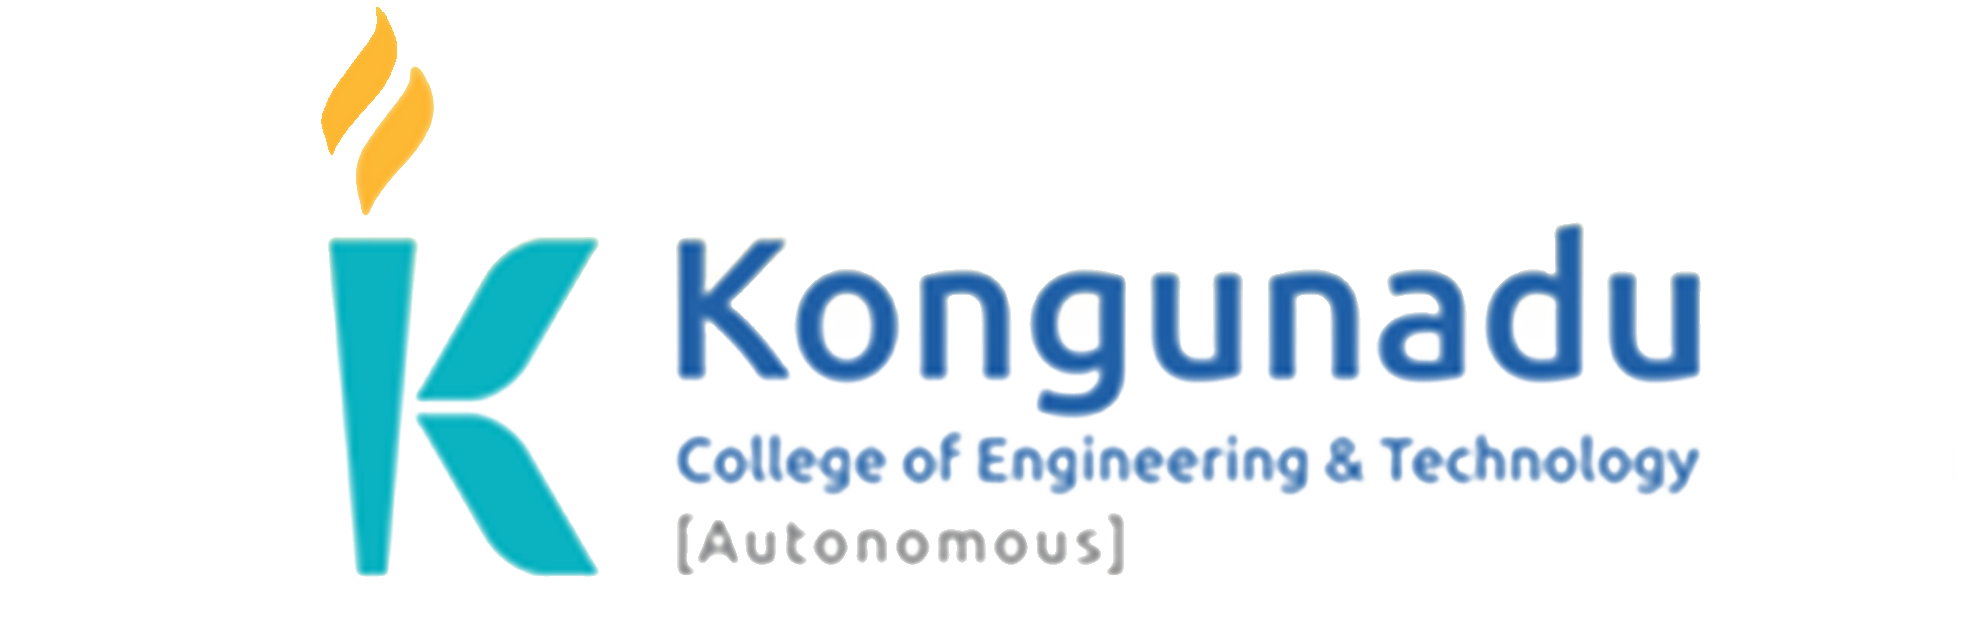 kongu logo